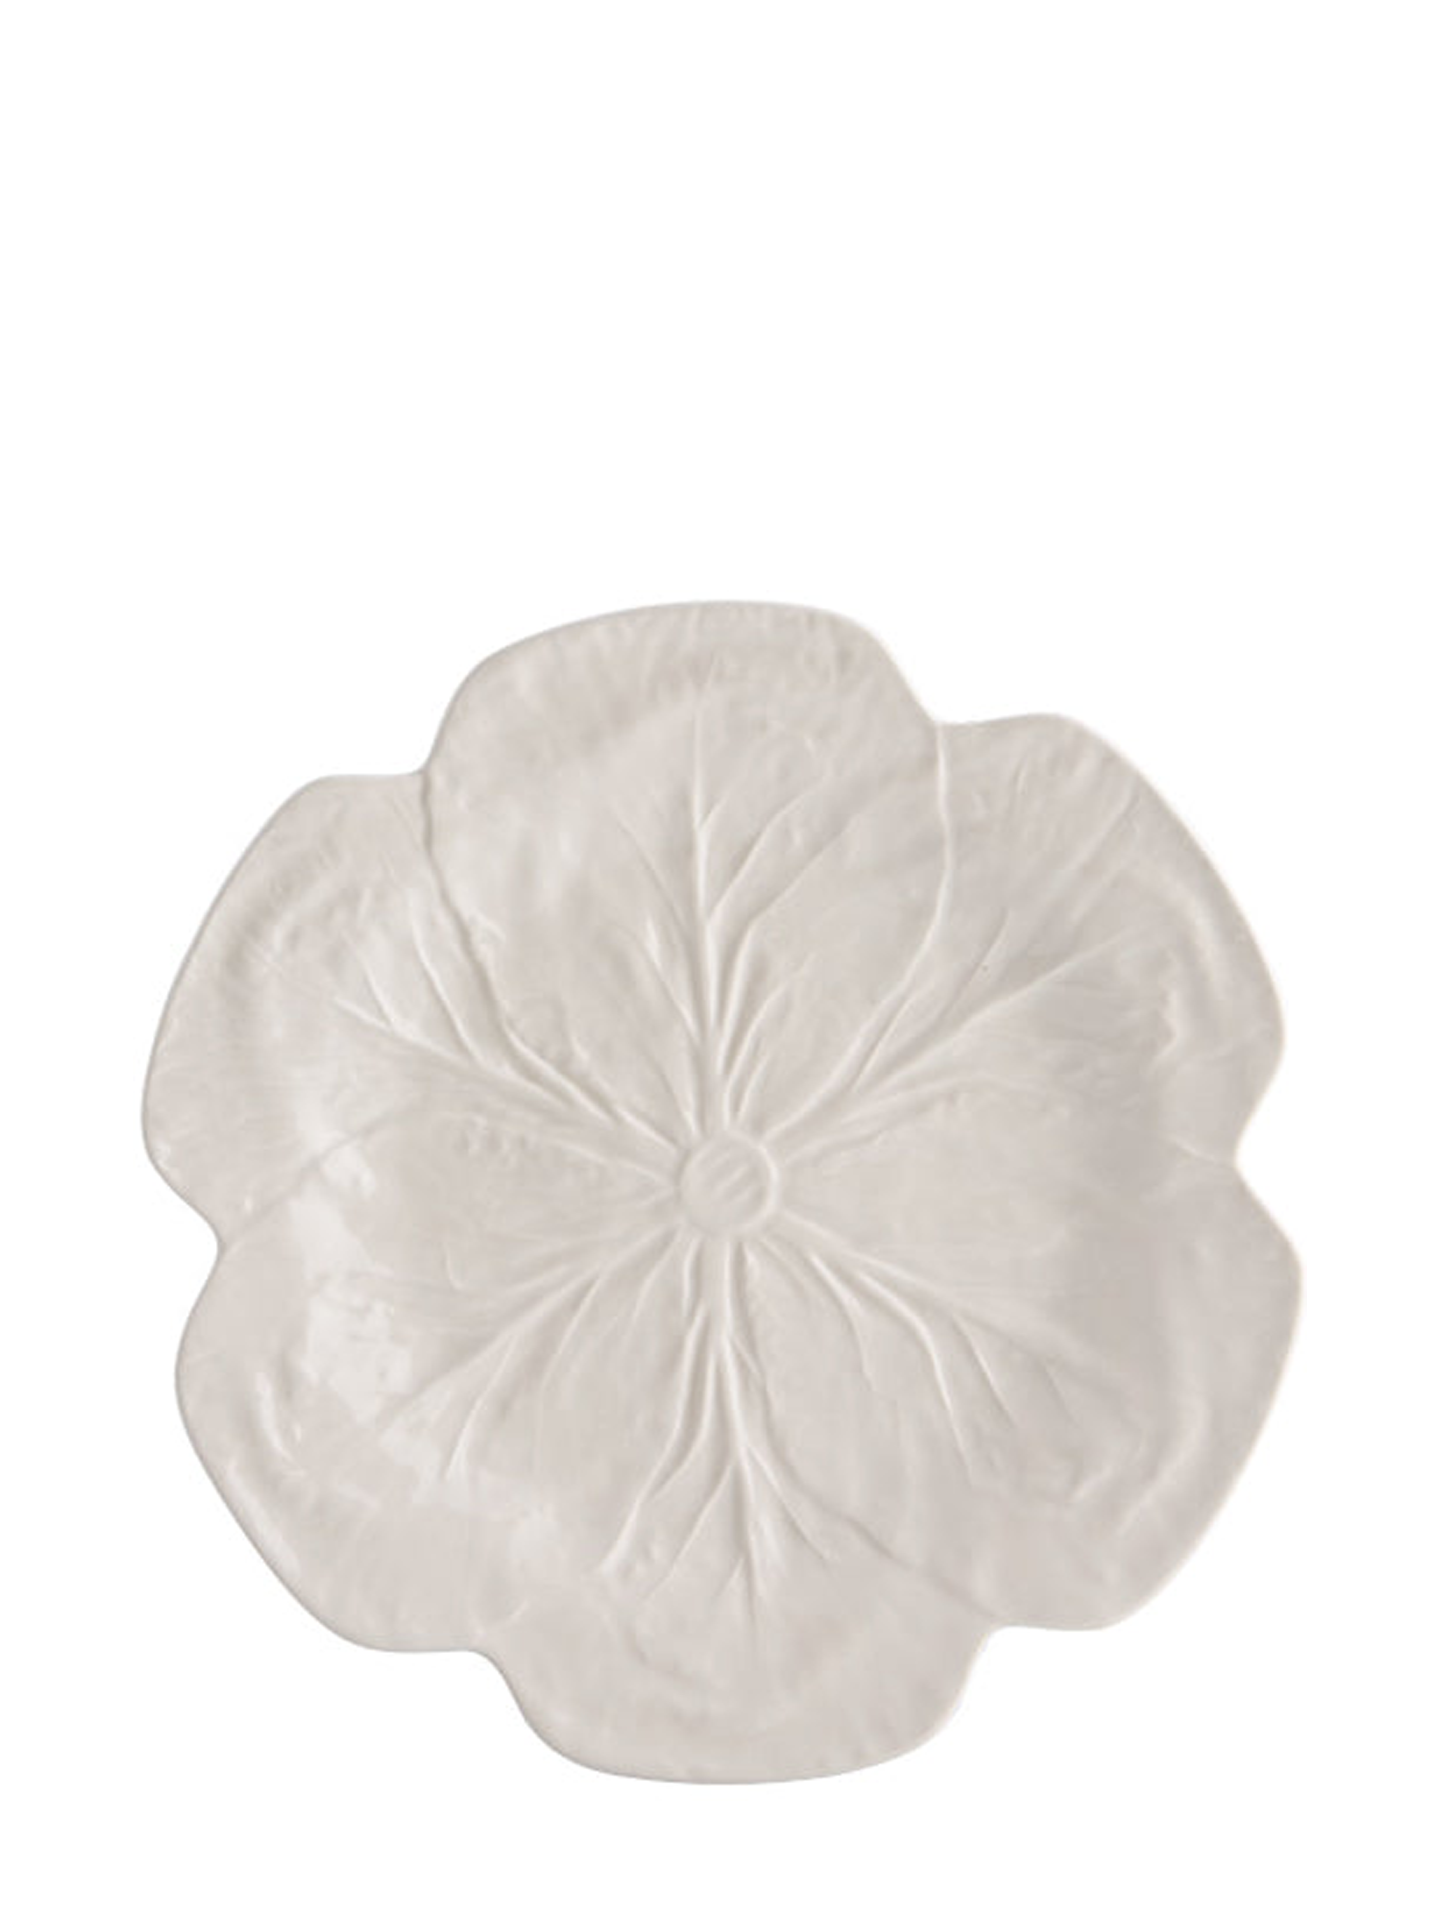 Bordallo Pinheiro: Cabbage Dinner Plate (26,5 cm), ivory